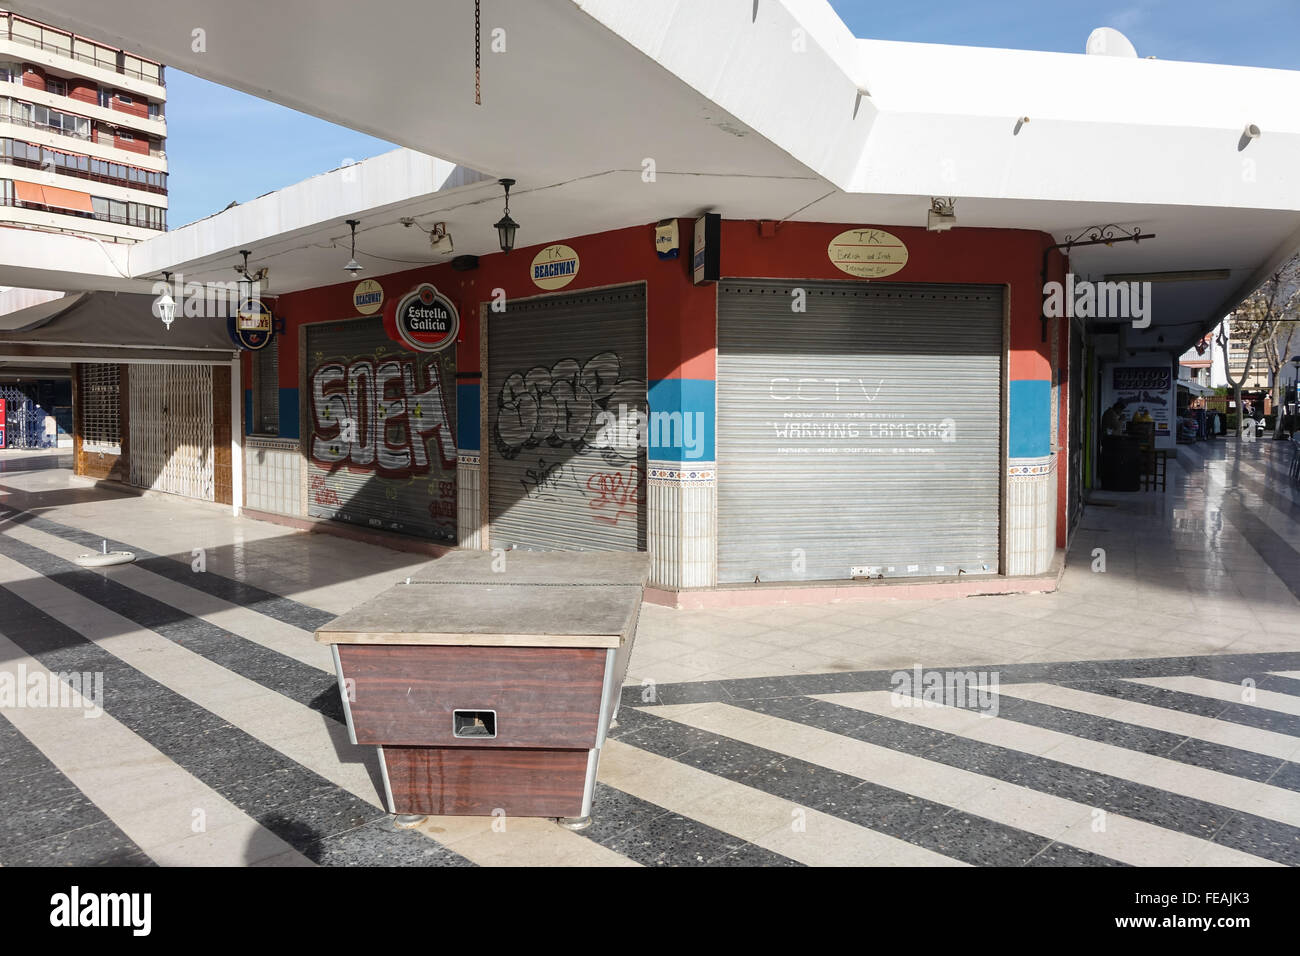 Failed British pub bar in a precinct in Benidorm, Alicante Province, Spain all closed up for sale and unsold Stock Photo